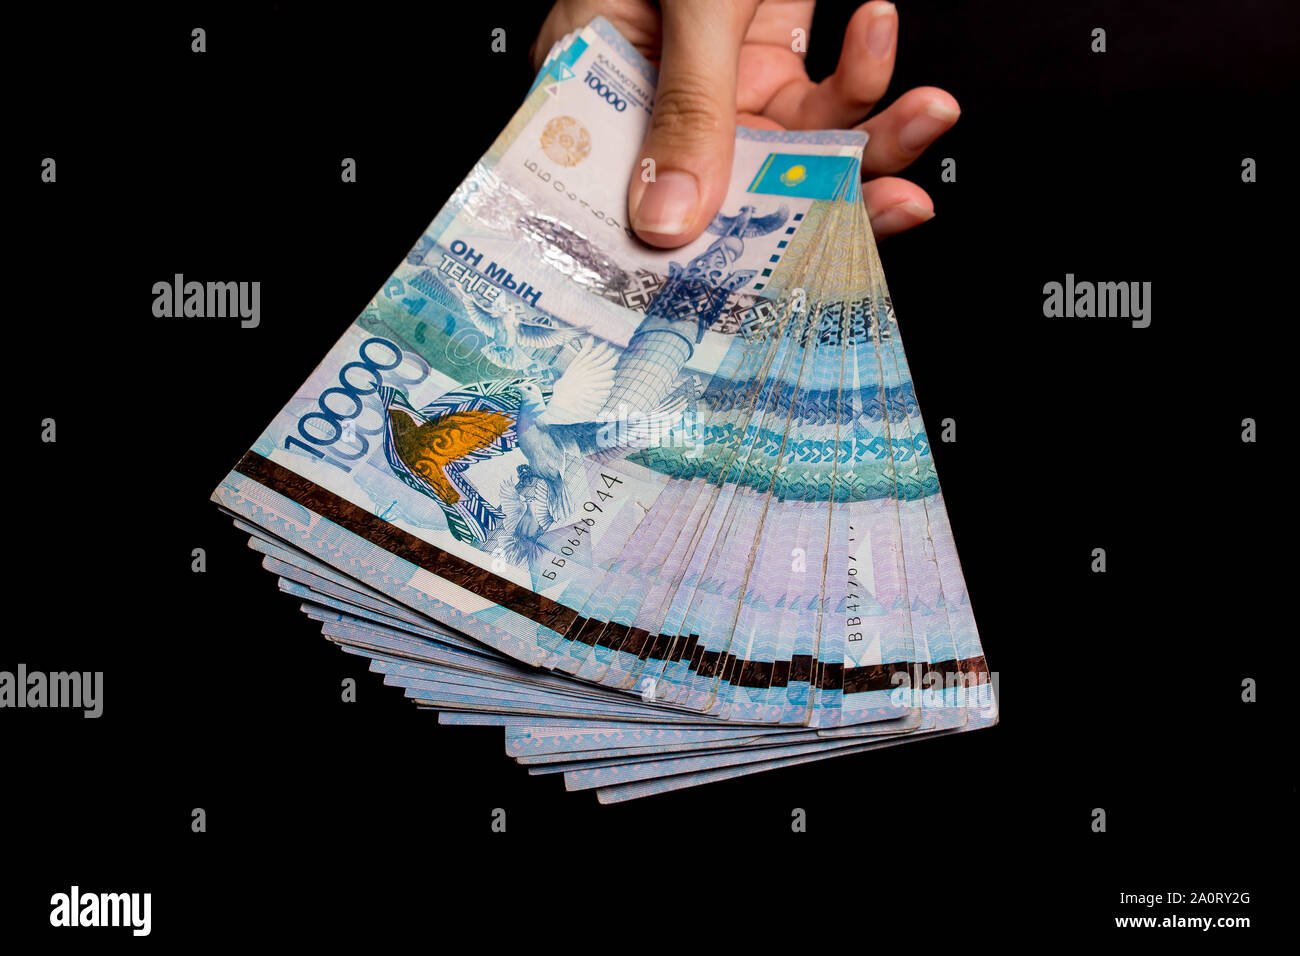 Дам деньги тг. Деньги Казахстана. Деньги тенге. Казахские деньги. Пачки денег тенге.